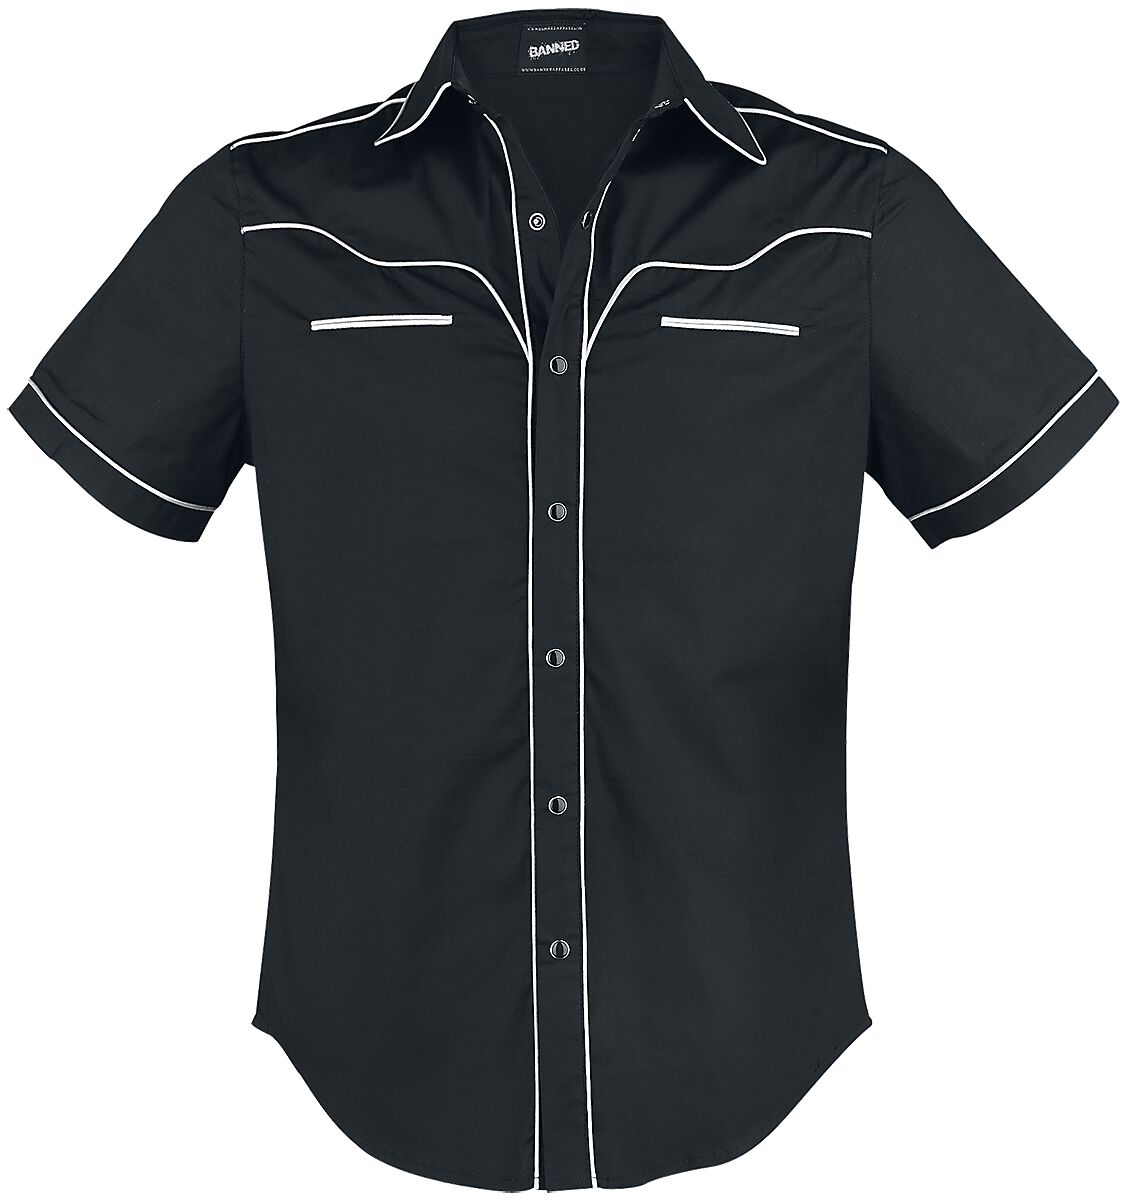 Banned Alternative Plain Trim Kurzarmhemd schwarz weiß in 4XL